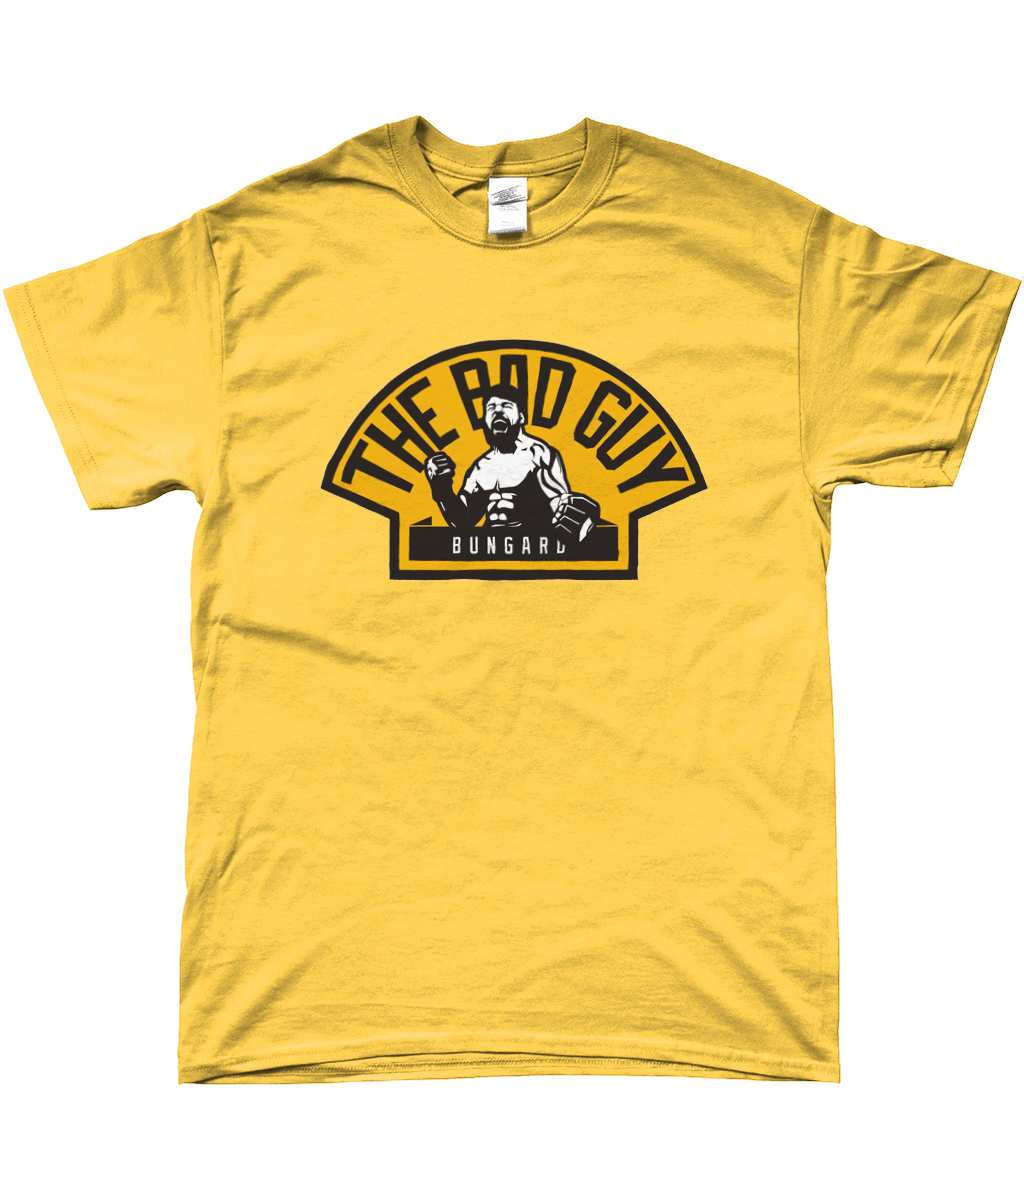 The Bad Guy T-Shirt (Yellow)